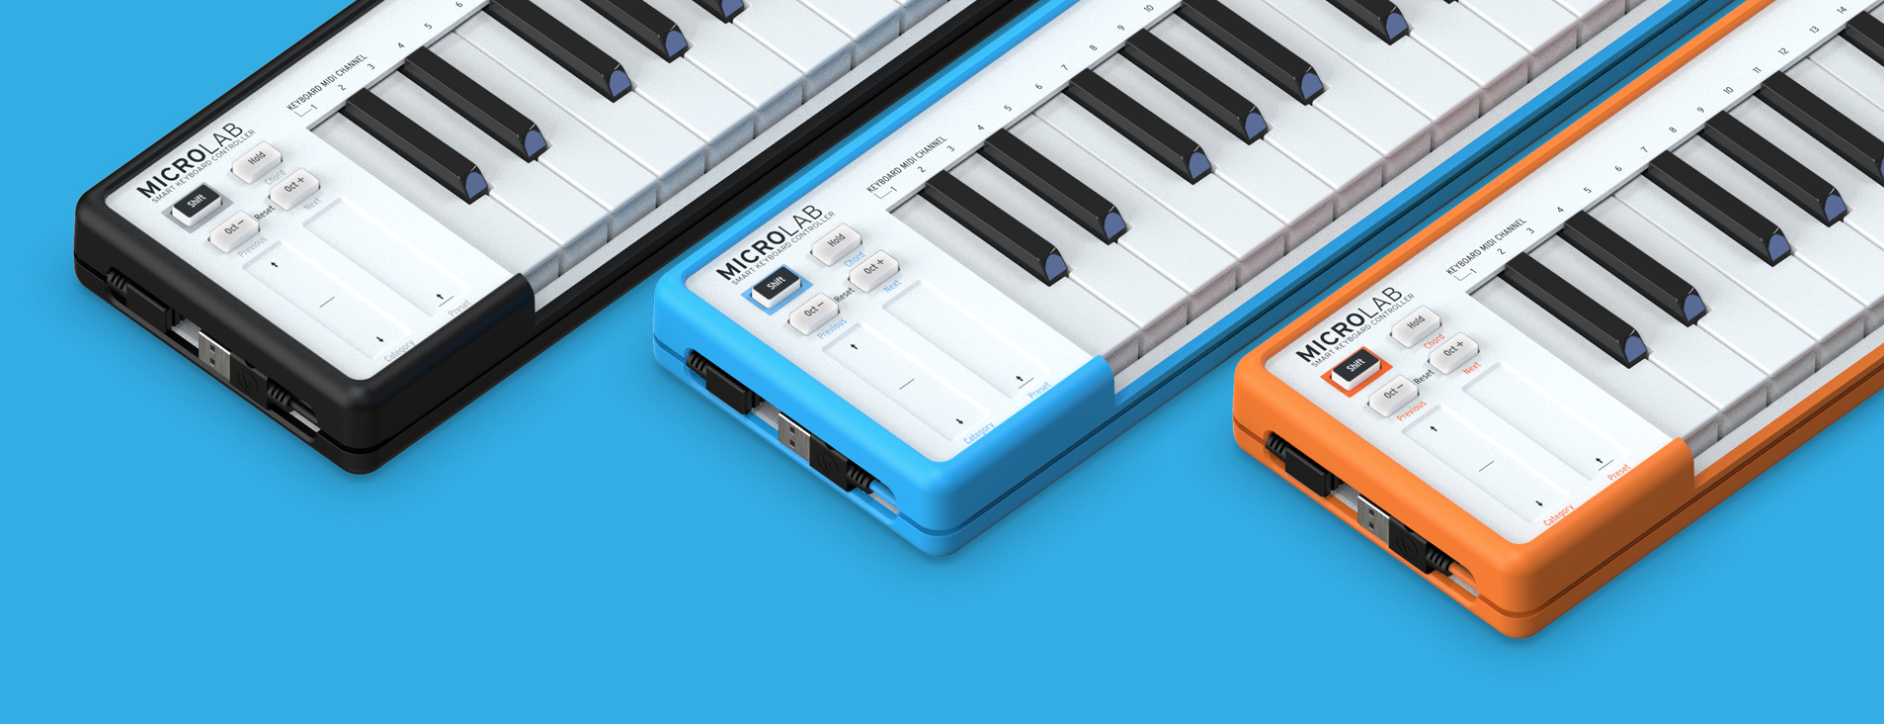 music keyboard app for mac